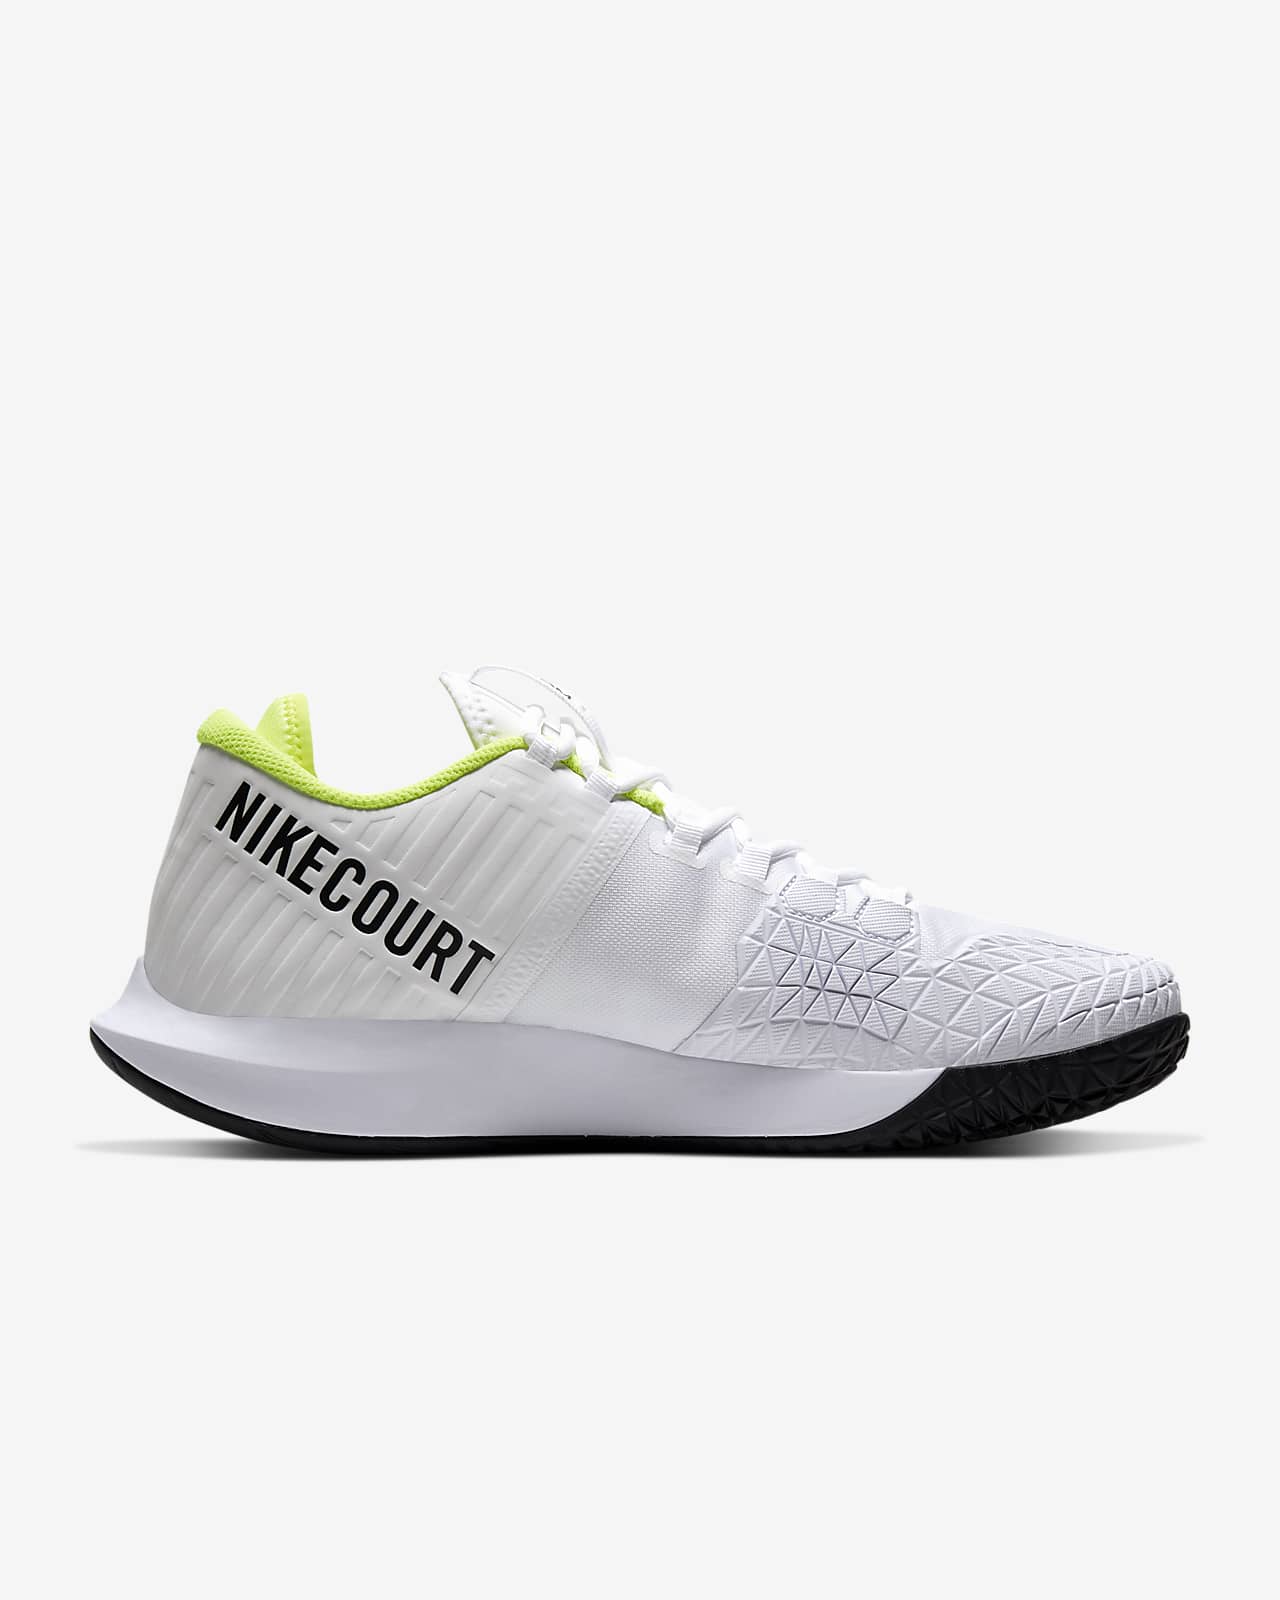 Calzado de tenis para hombre NikeCourt Air Zoom Zero. Nike CL